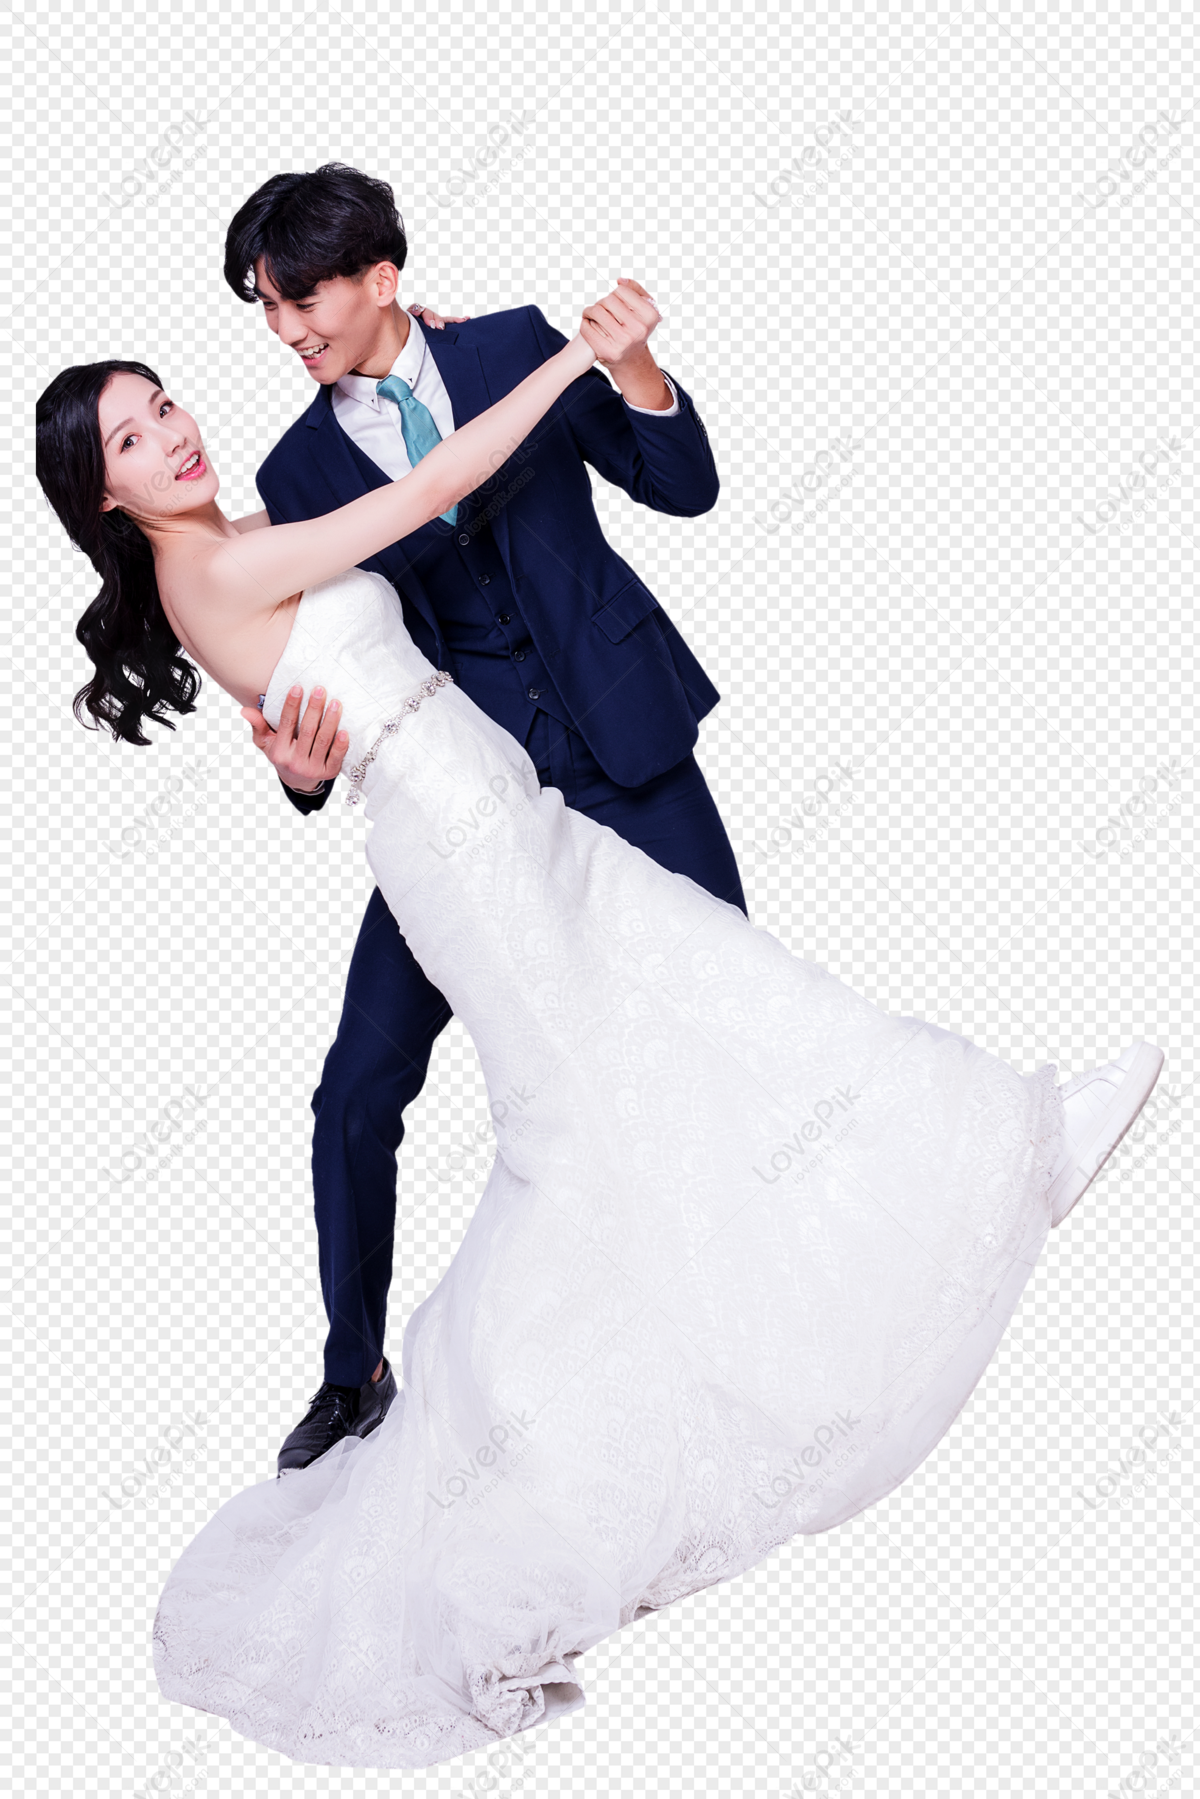 wedding couple dancing clipart